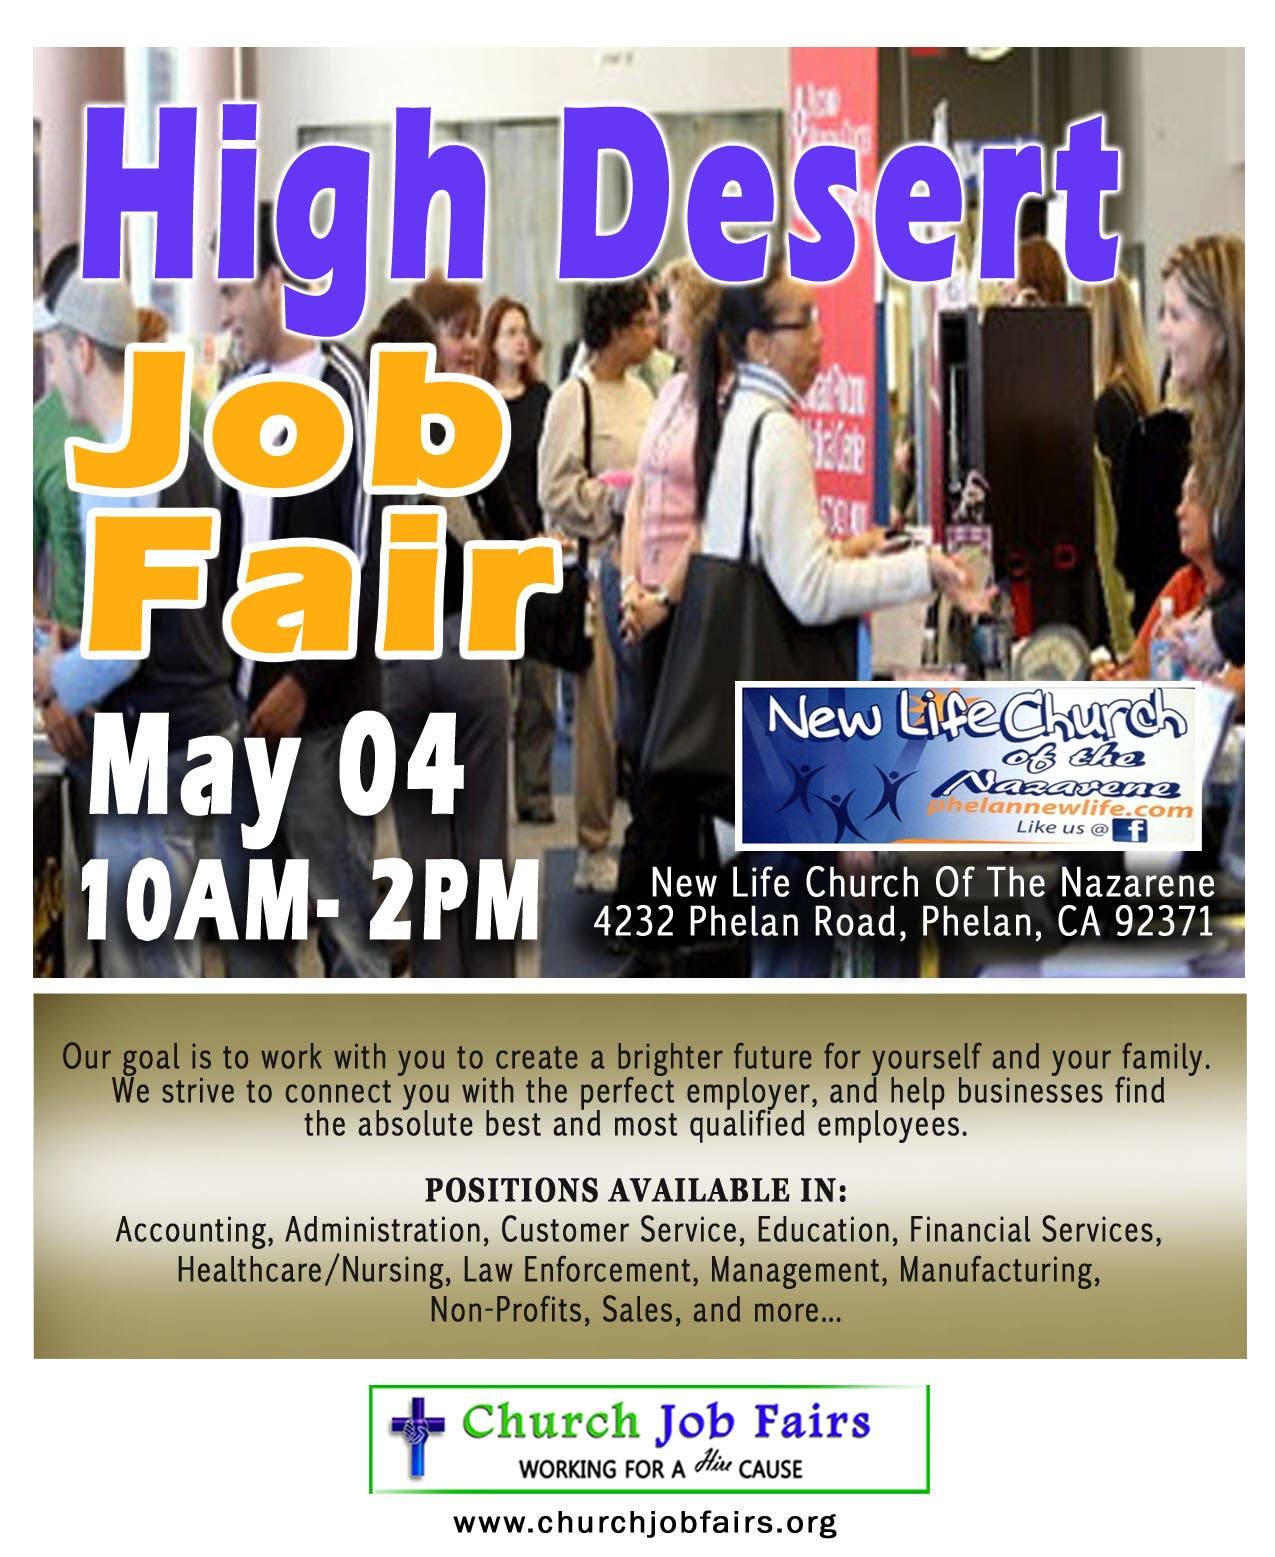 Phelan Church to Host Job Fair on May 4